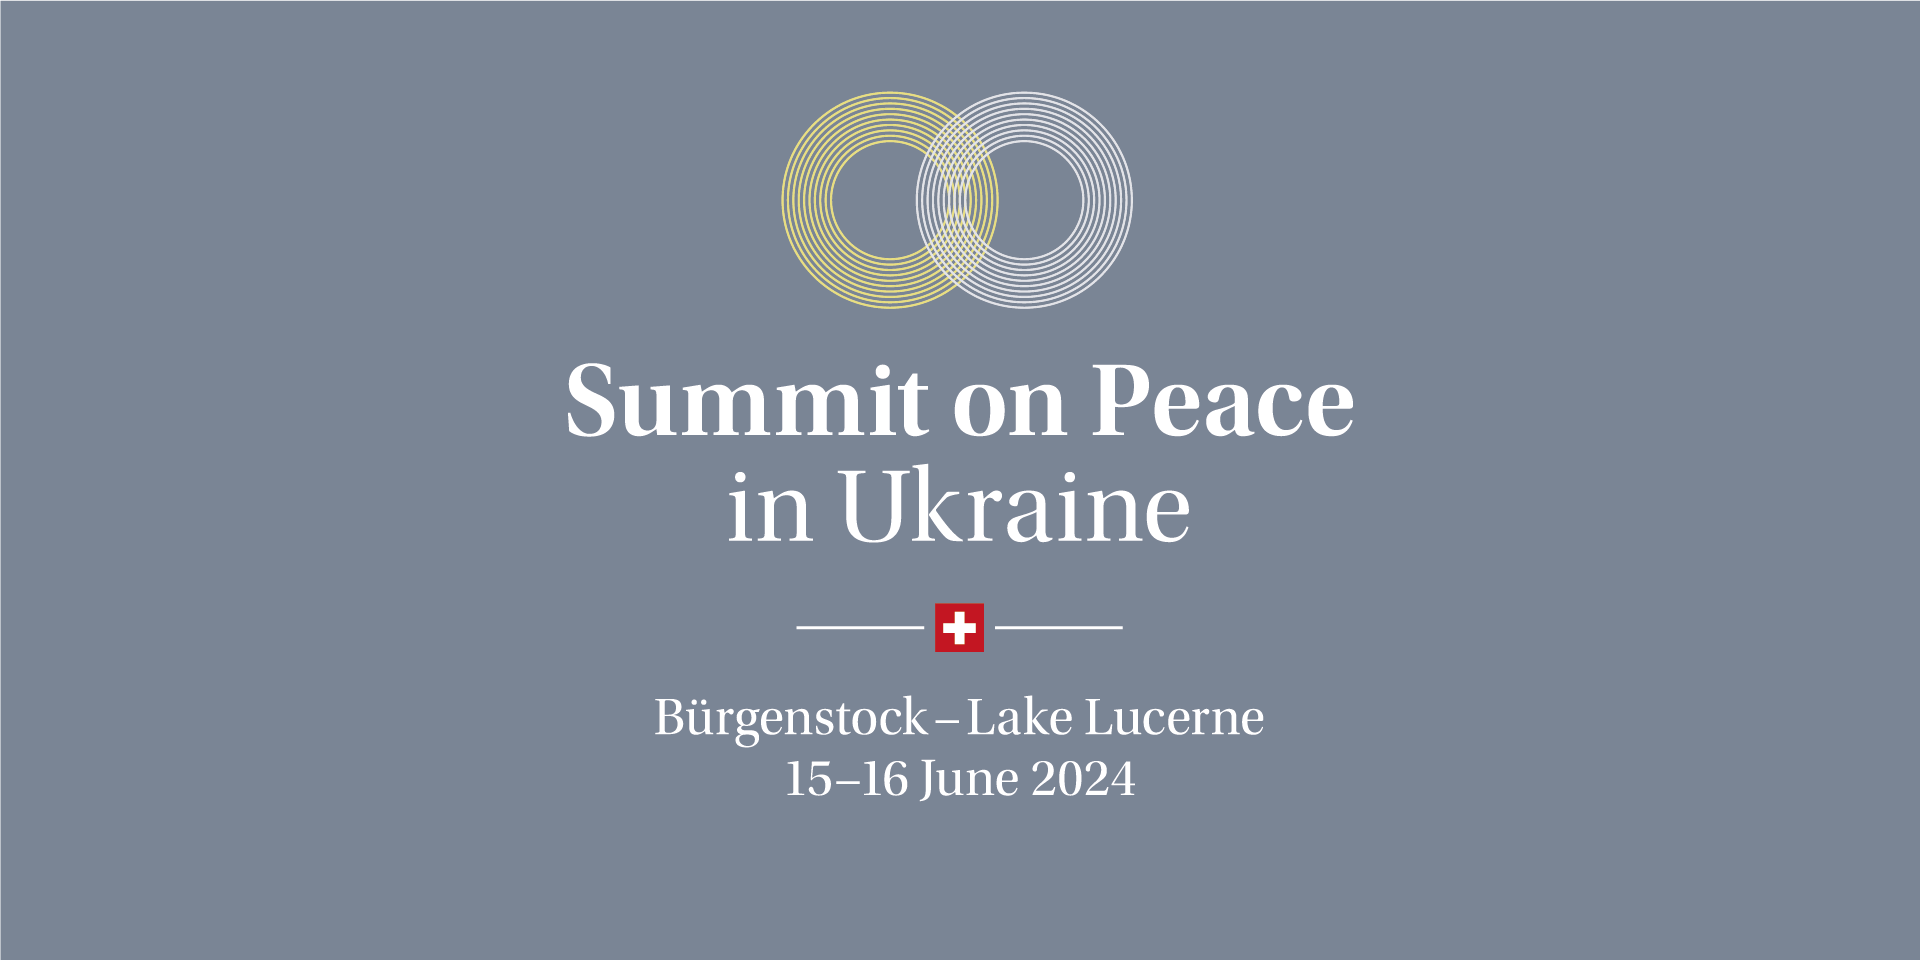 The logo of the Summit on Peace in Ukraine, Bürgenstock - Lake Lucerne, 15-16 June 2024.